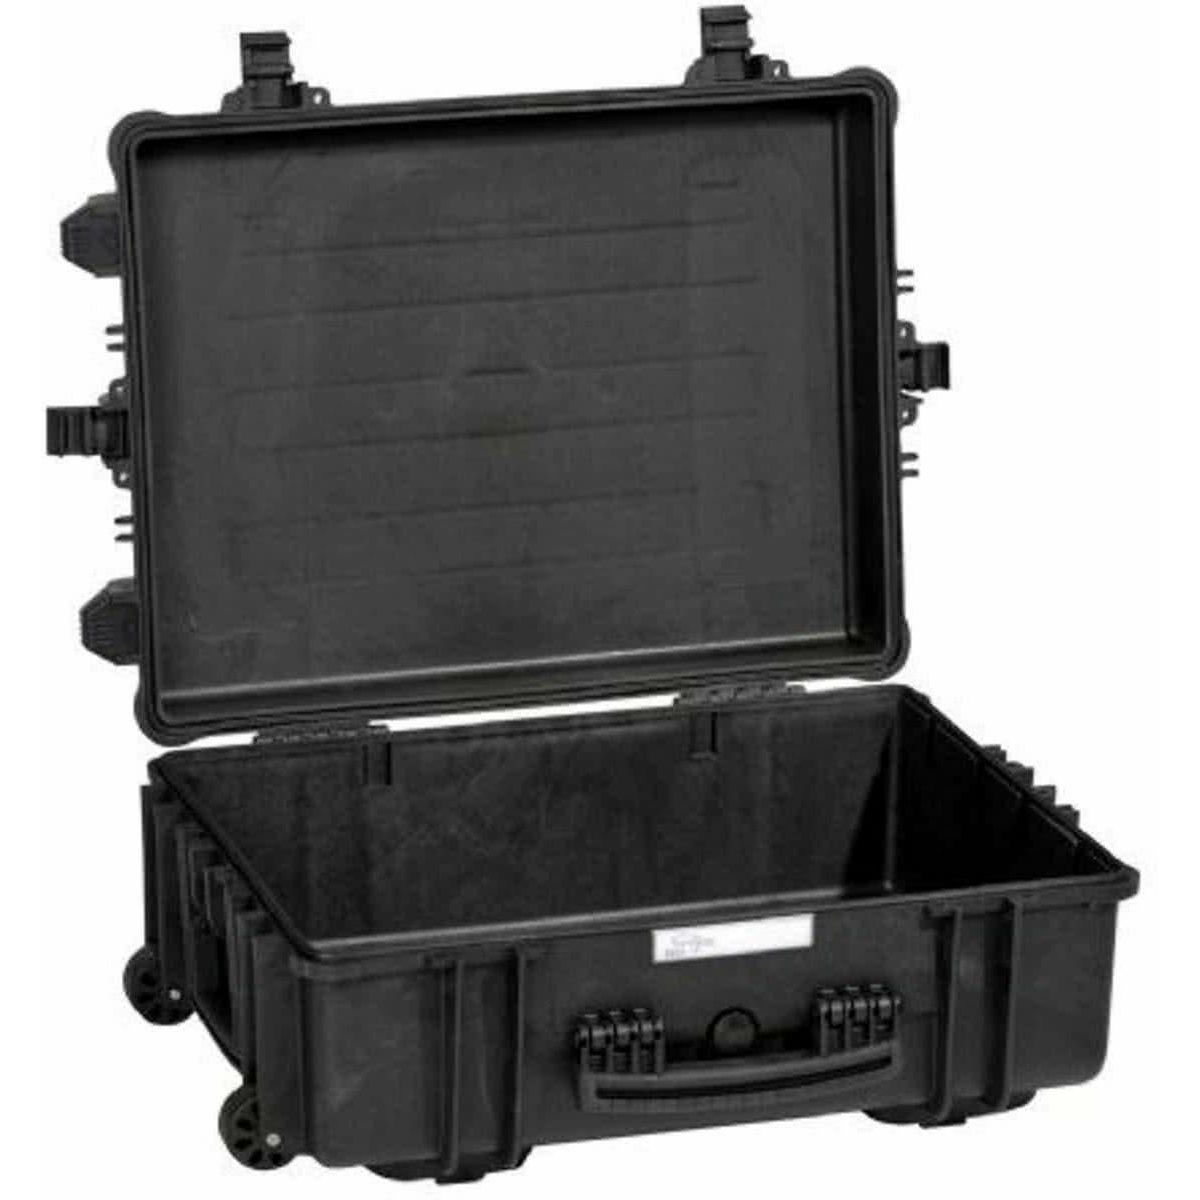 Explorer Cases 5823 Black 670x510x262mm kufer za foto opremu kofer Camera Case